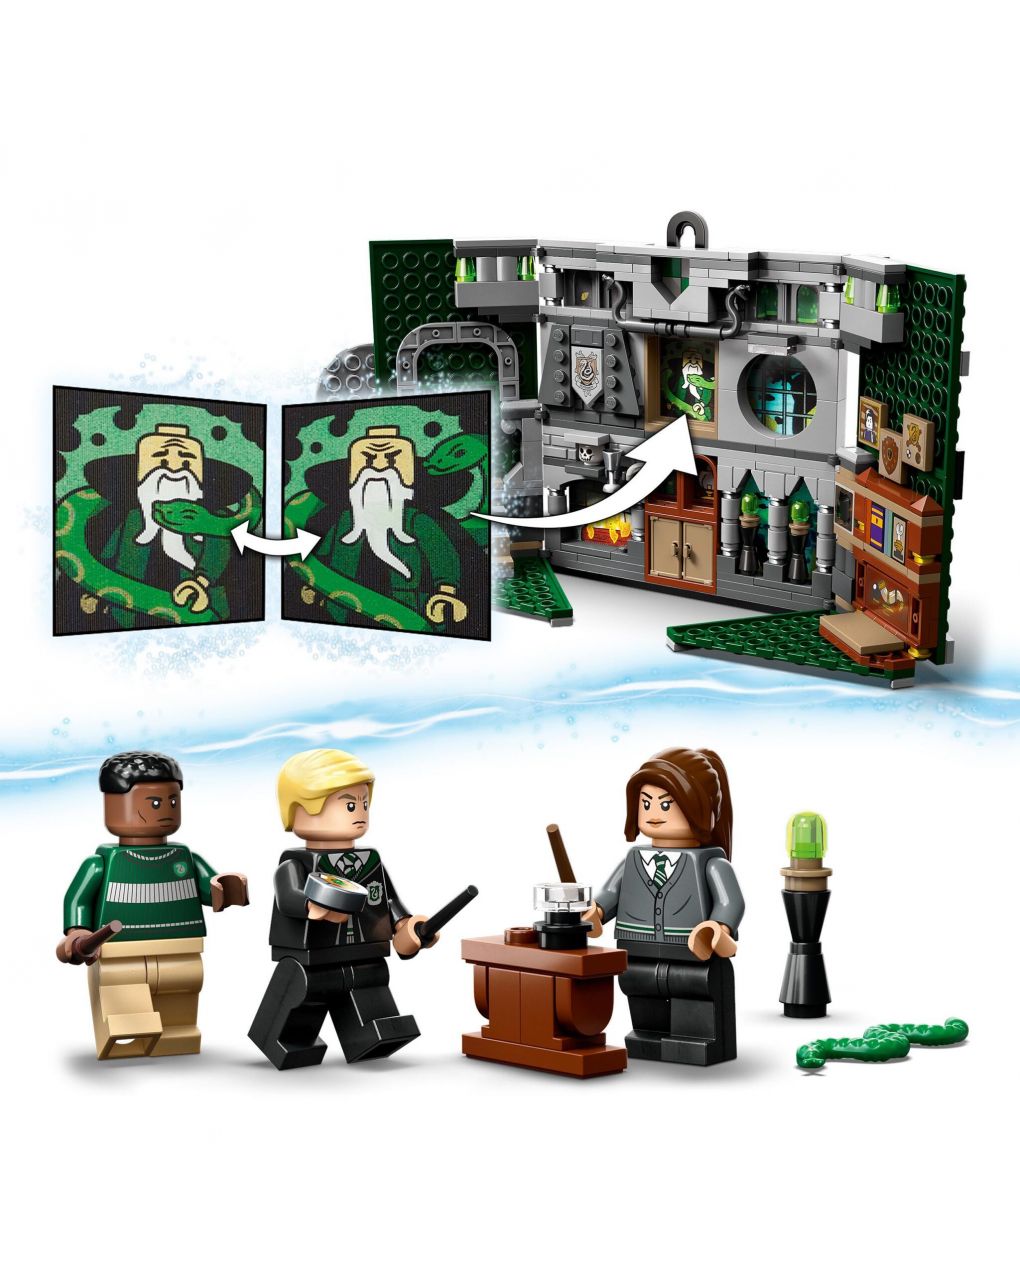 Estandarte de la casa slytherin - lego harry potter - LEGO